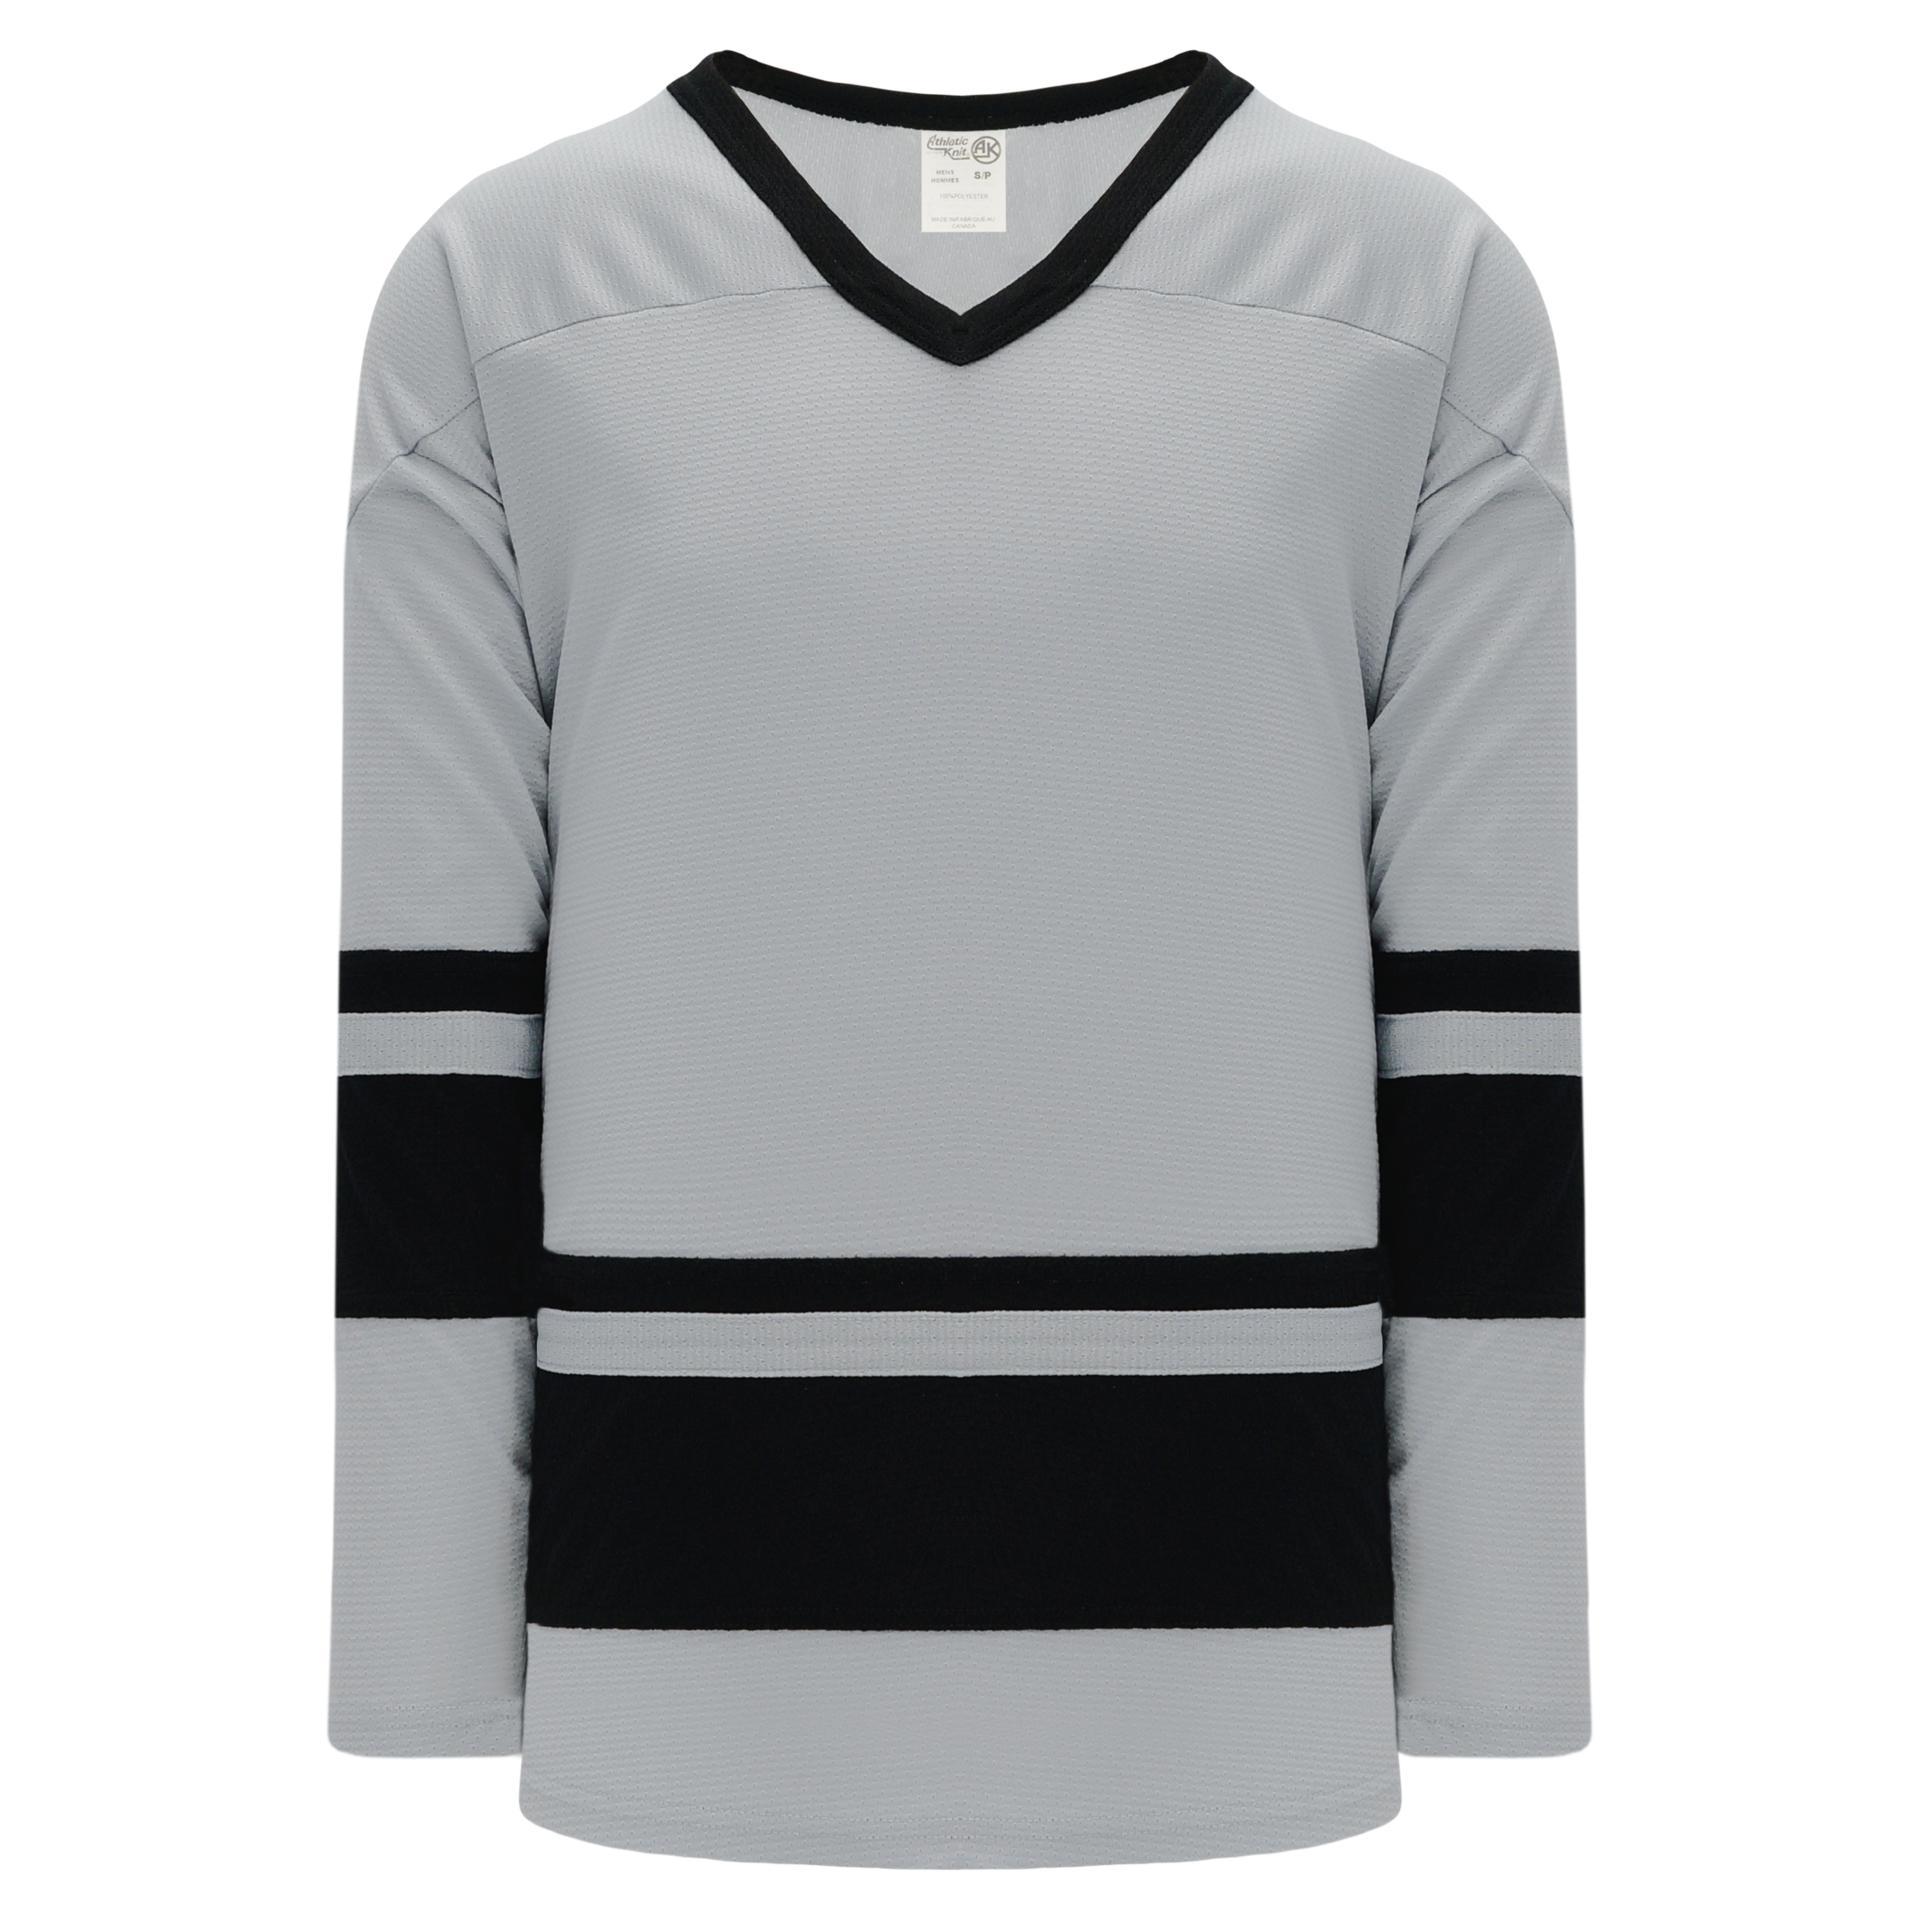 Half/Half Brawn Hockey Jersey in Grey